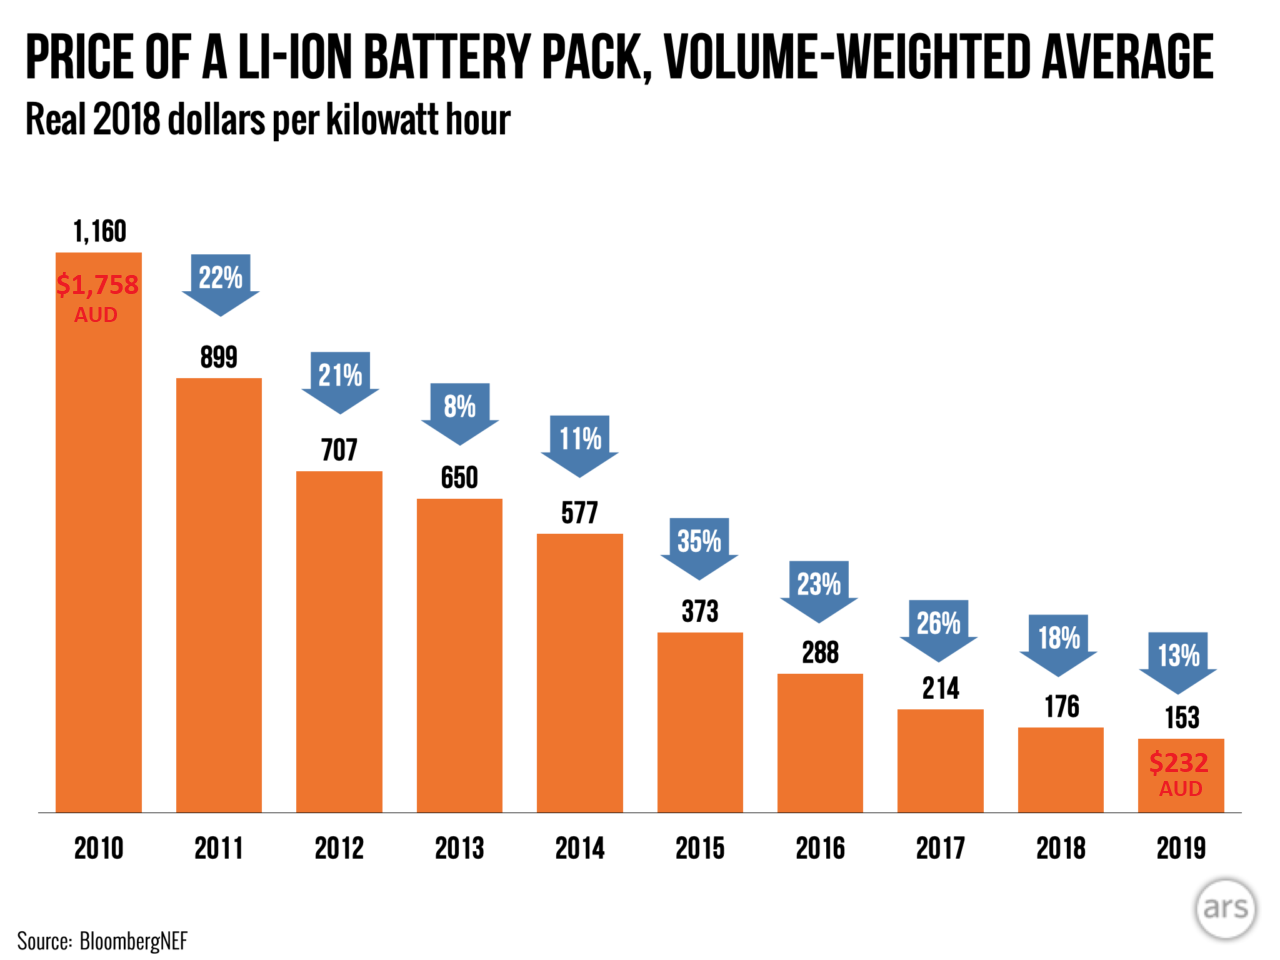 Historical prices of li-ion battery packs per kilowatt hour